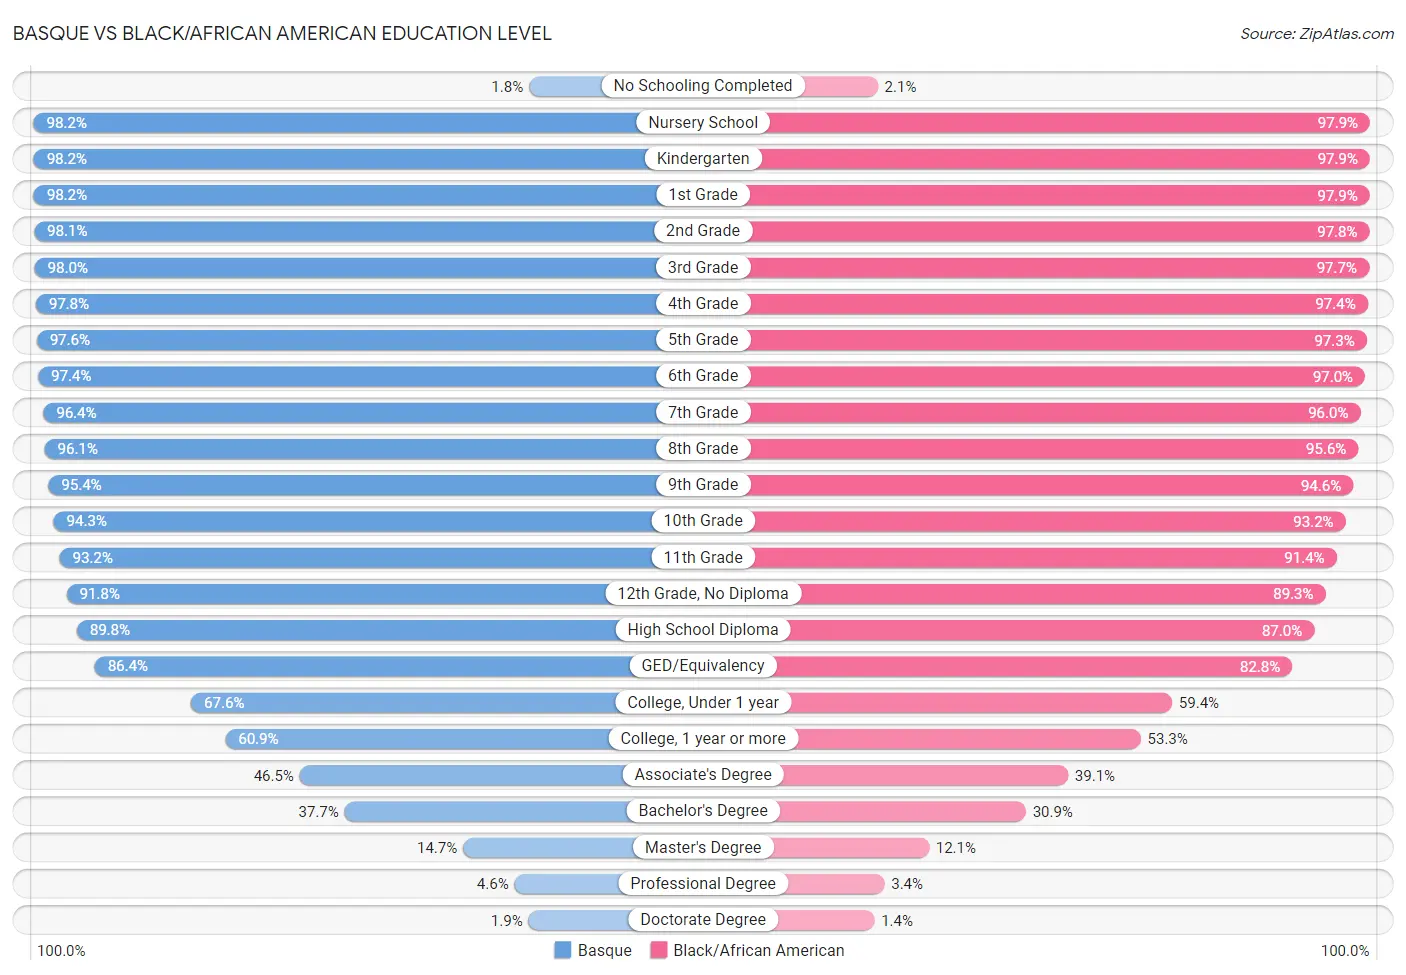 Basque vs Black/African American Education Level